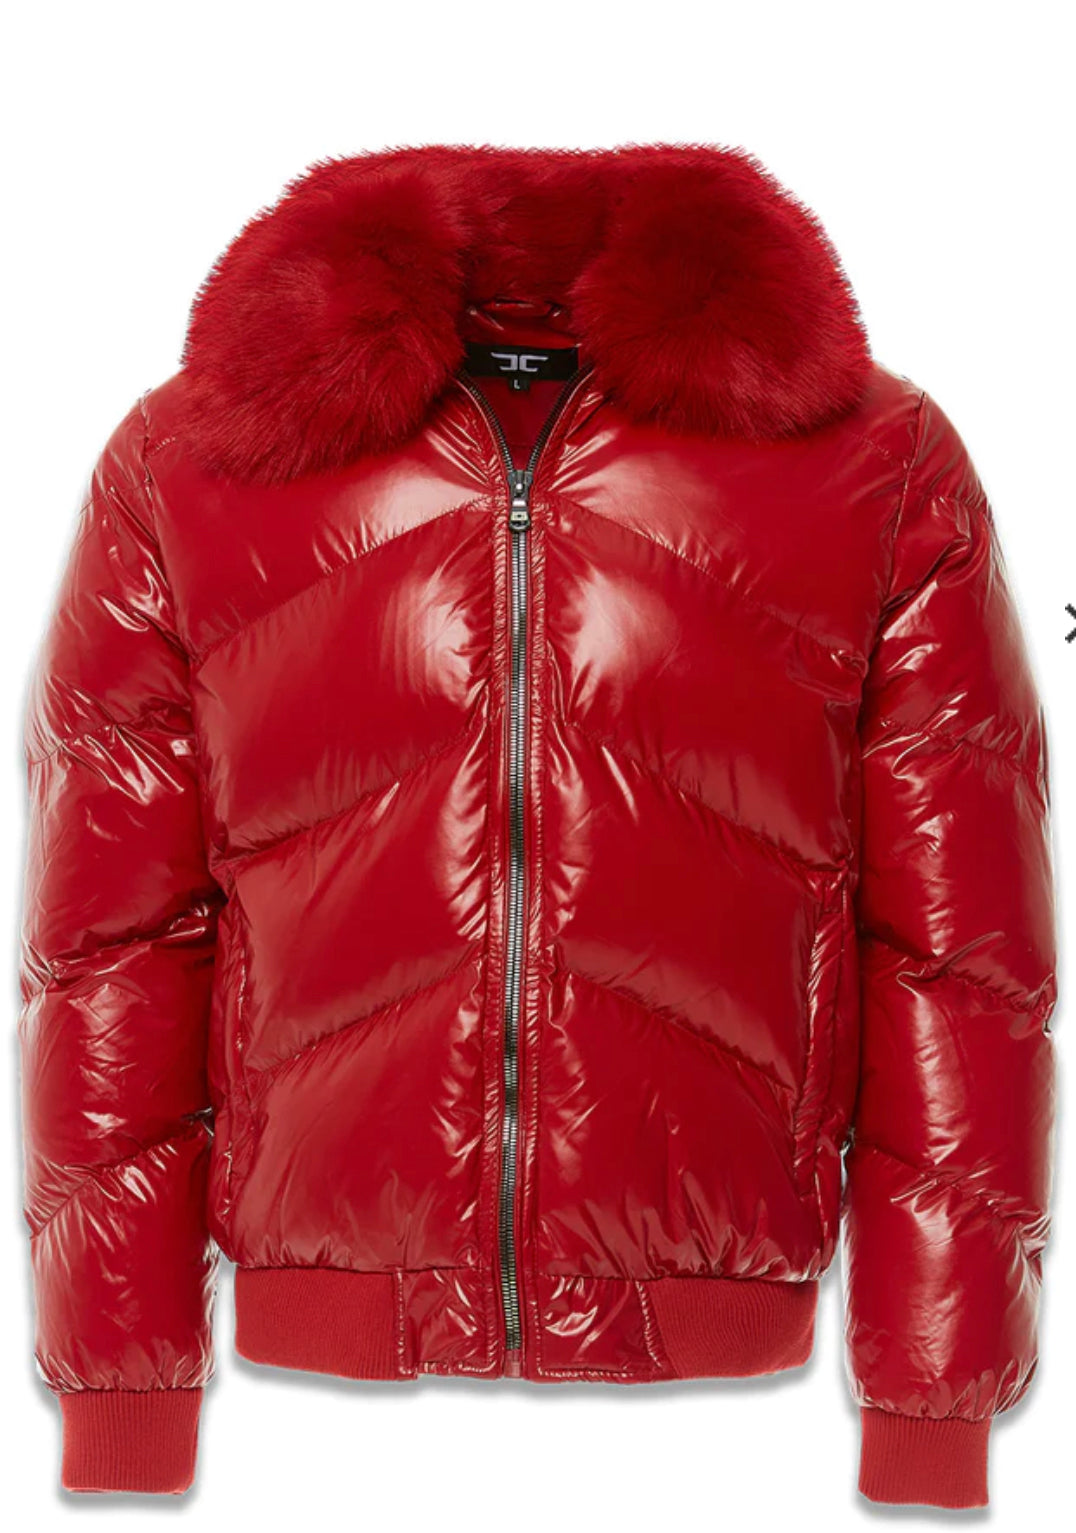 Jordan Craig  shiny Puffer jacket   Red 91582